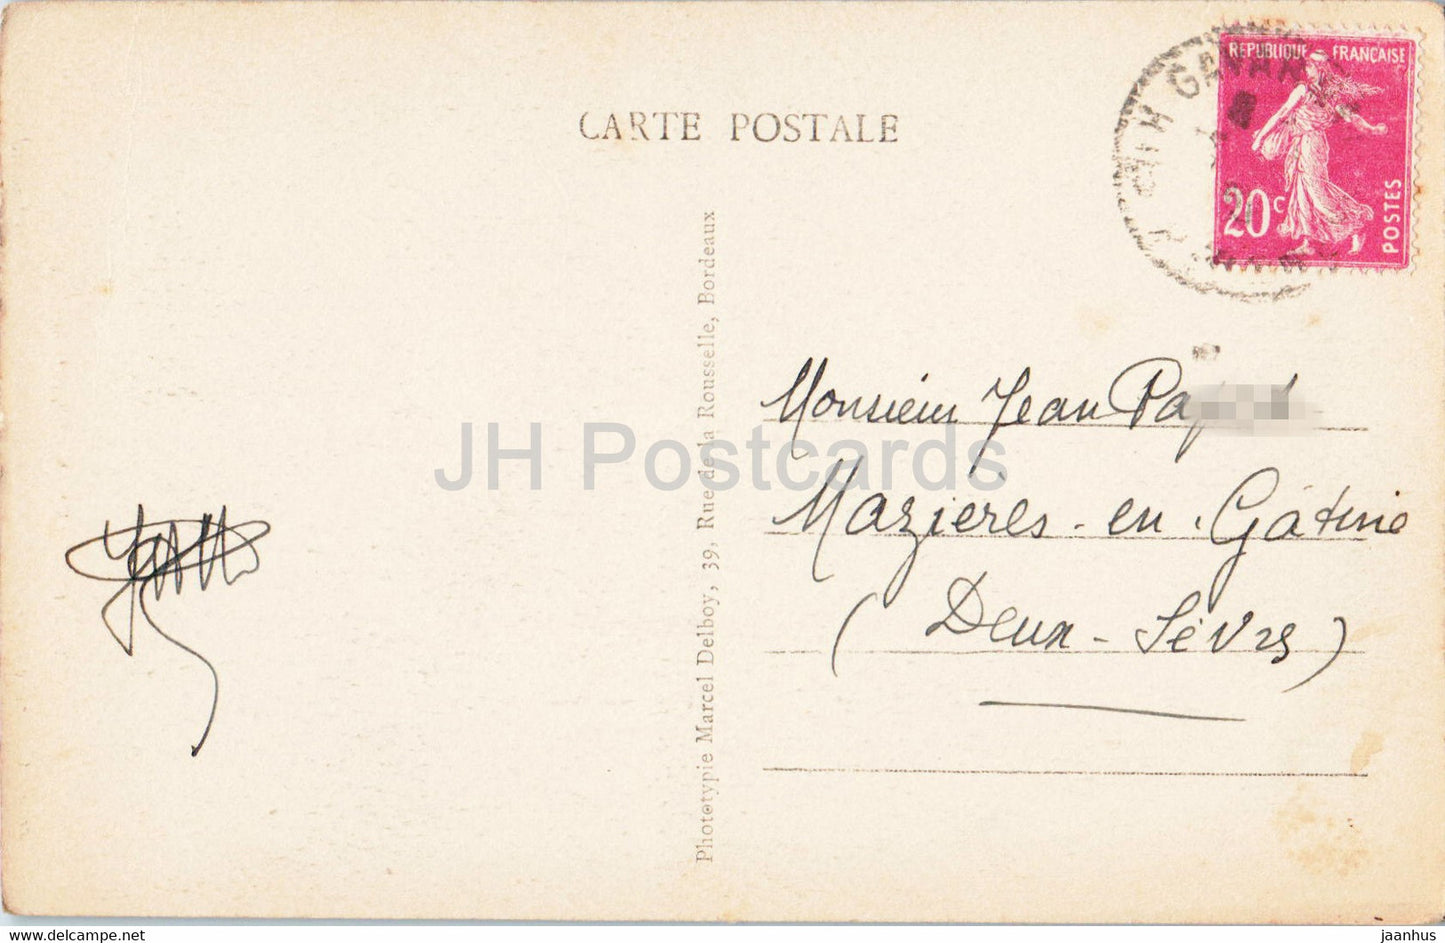 Gavarnie - La Grande Cascade du Cirque - Les Petites Cascades - 19 - old postcard - France - used